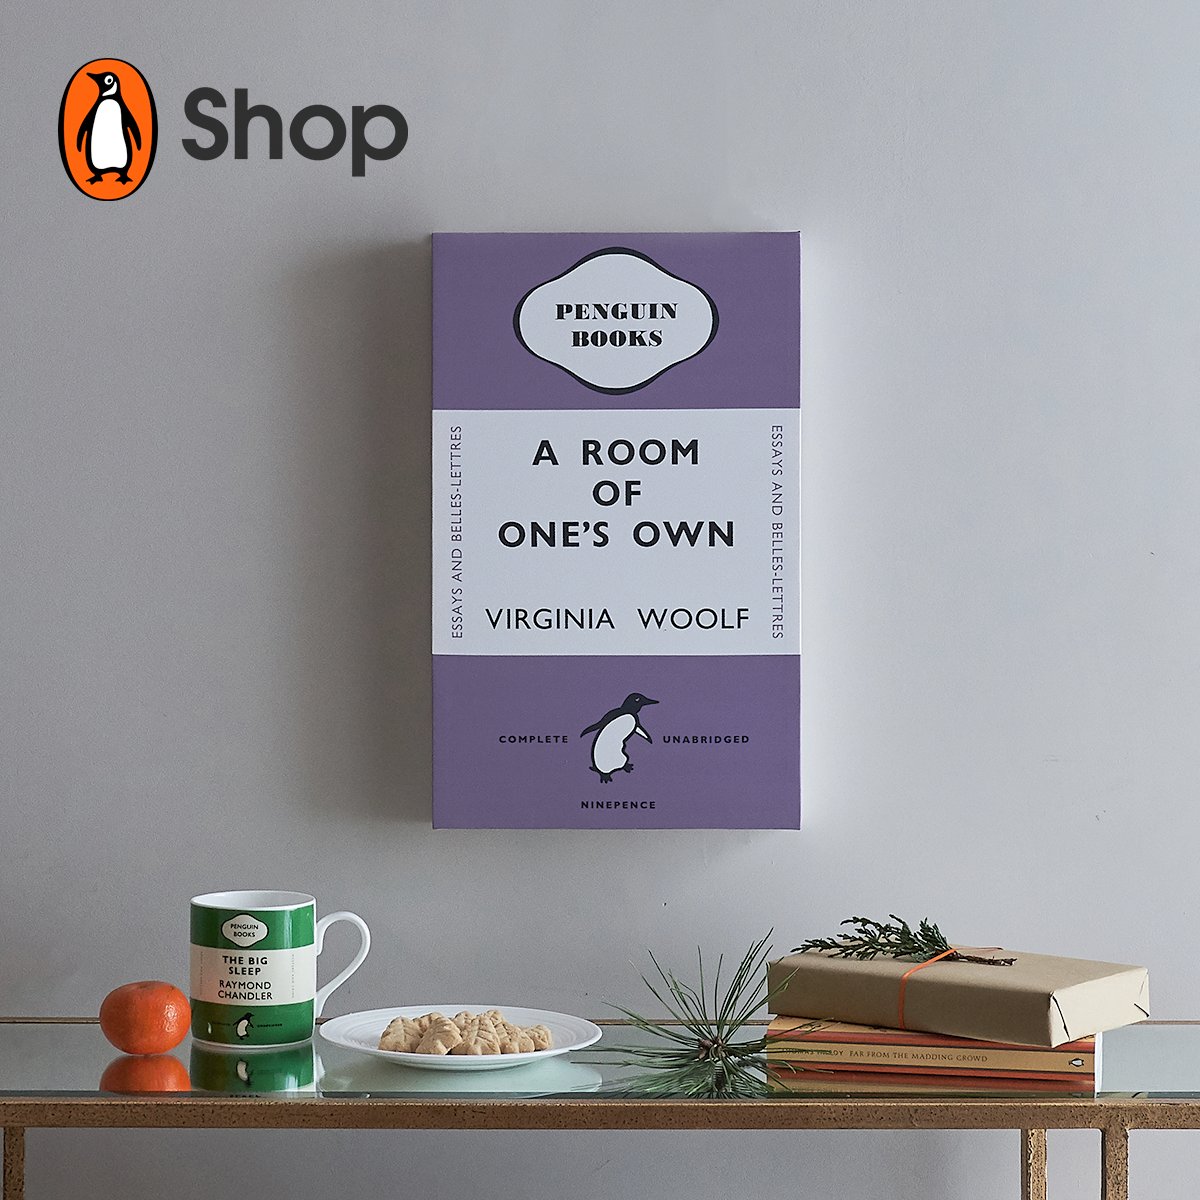 Penguin Books Uk On Twitter New To The Penguin Shop From